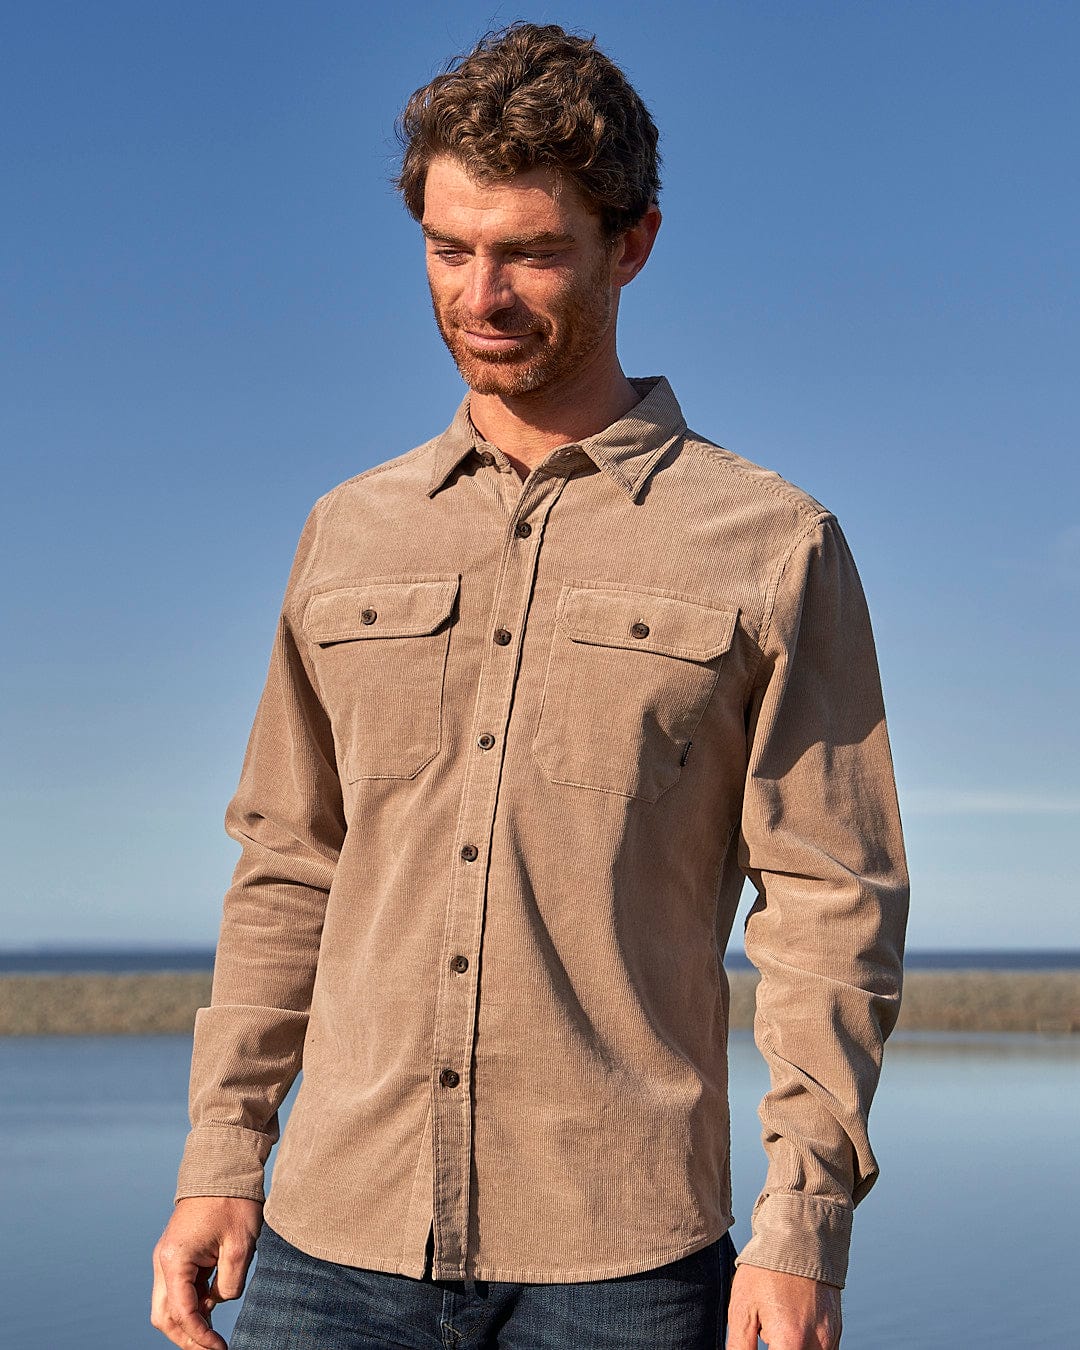 A man wearing a Saltrock Ace - Men Corduroy Shirt - Light Brown standing by the water.